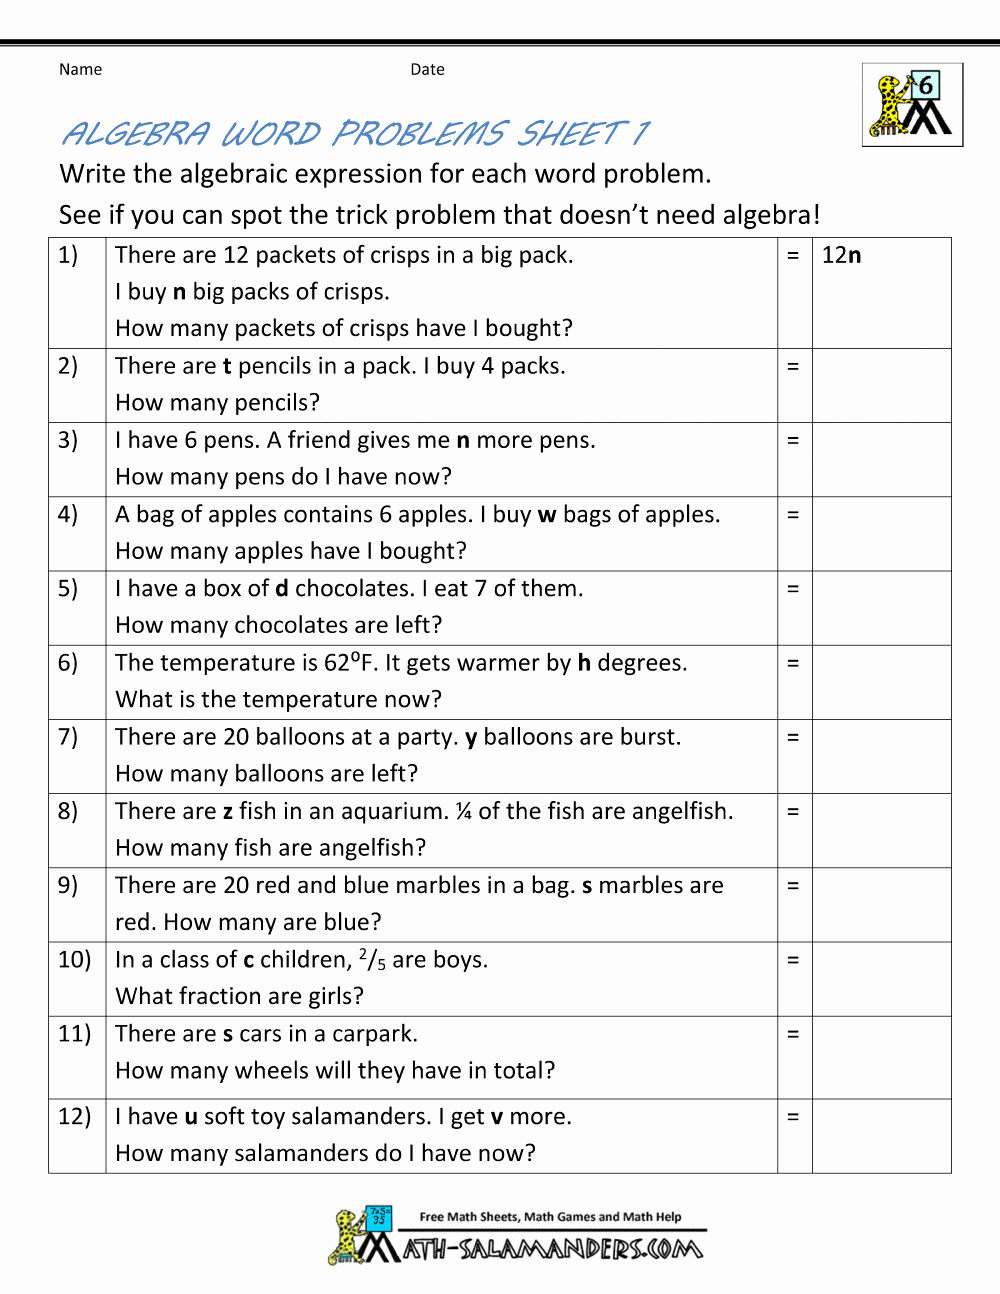 Writing and Evaluating Expressions Worksheet Inspirational 6th Grade Math Worksheets Algebra Worksheet Mogenk Paper